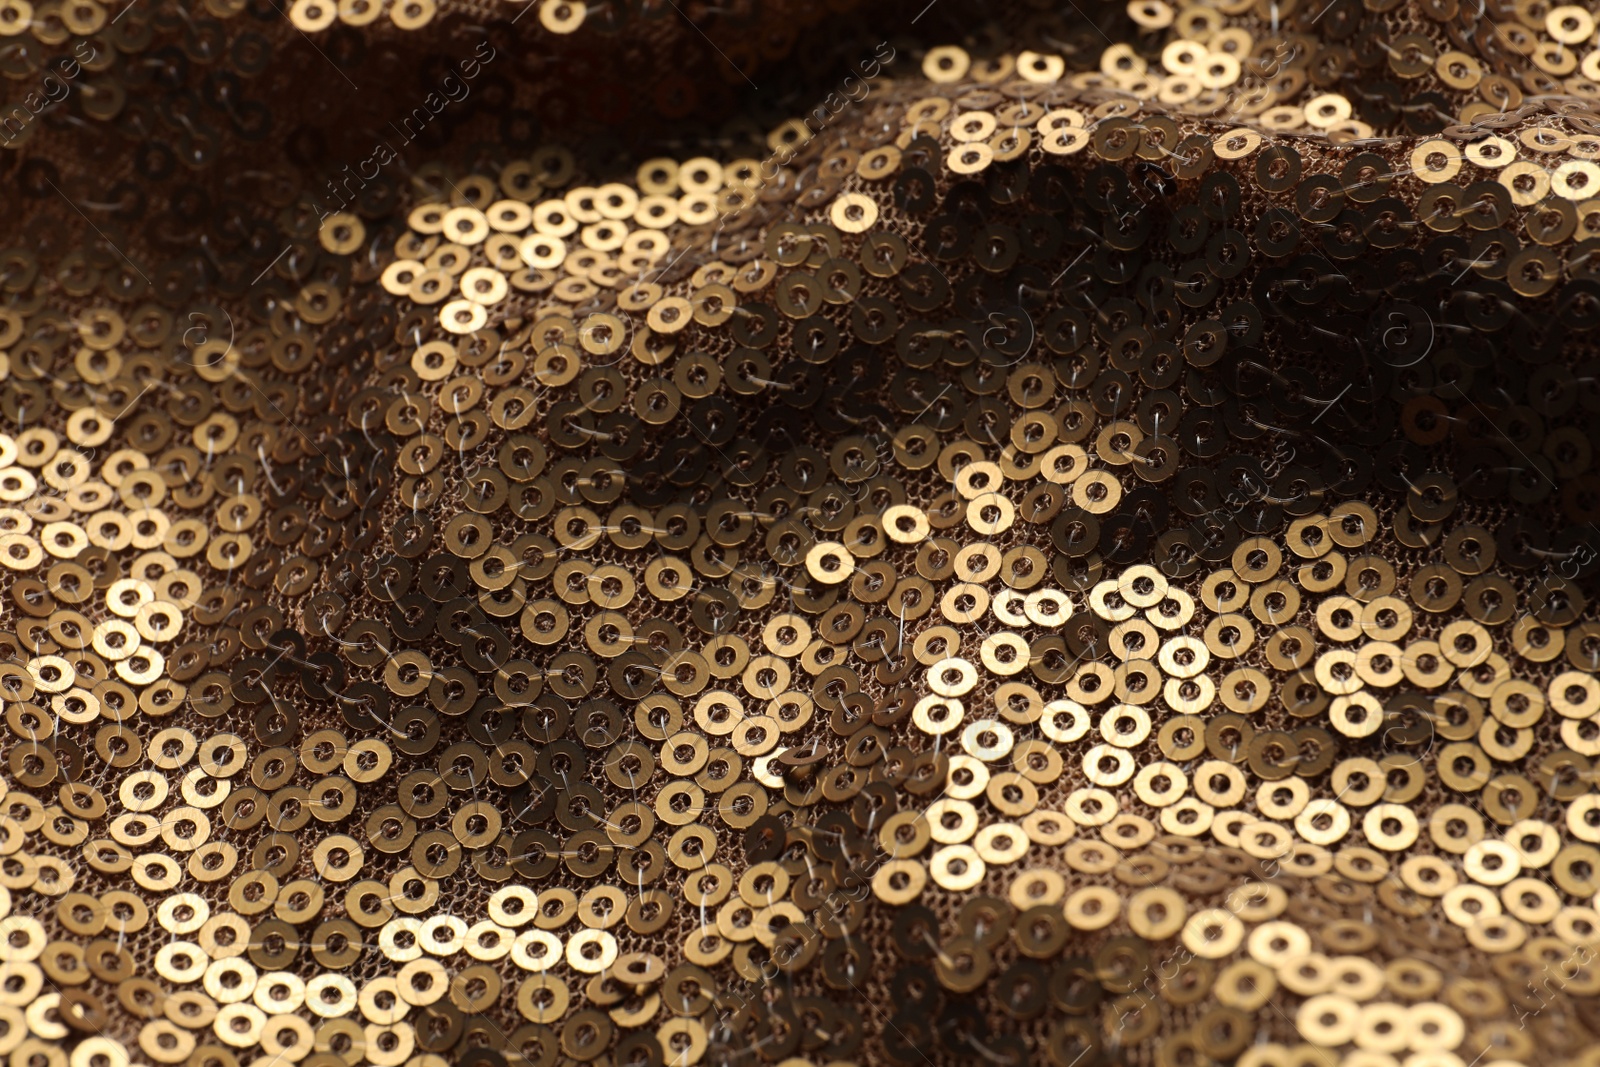 Photo of Beautiful golden sequin fabric as background, closeup